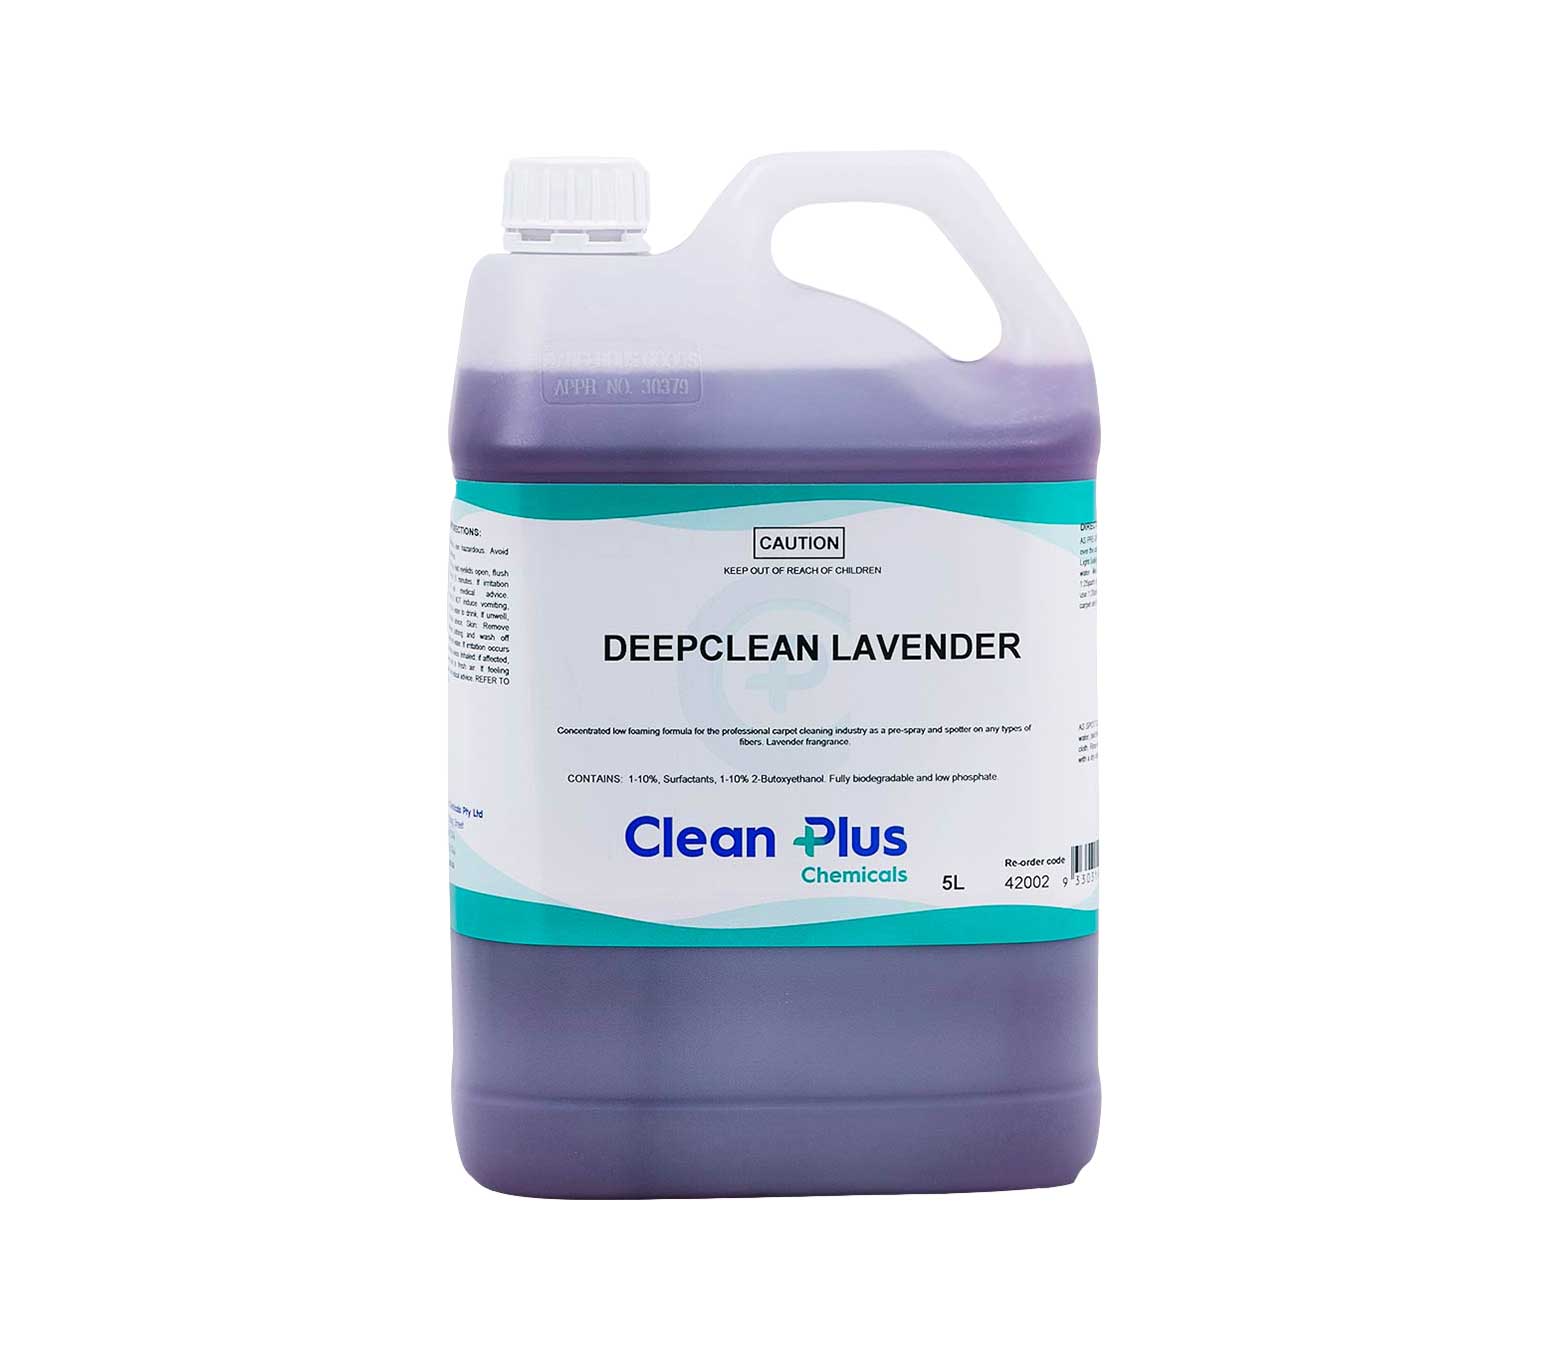 Deep-clean Lavender - pre-spray and spotter Lavender.